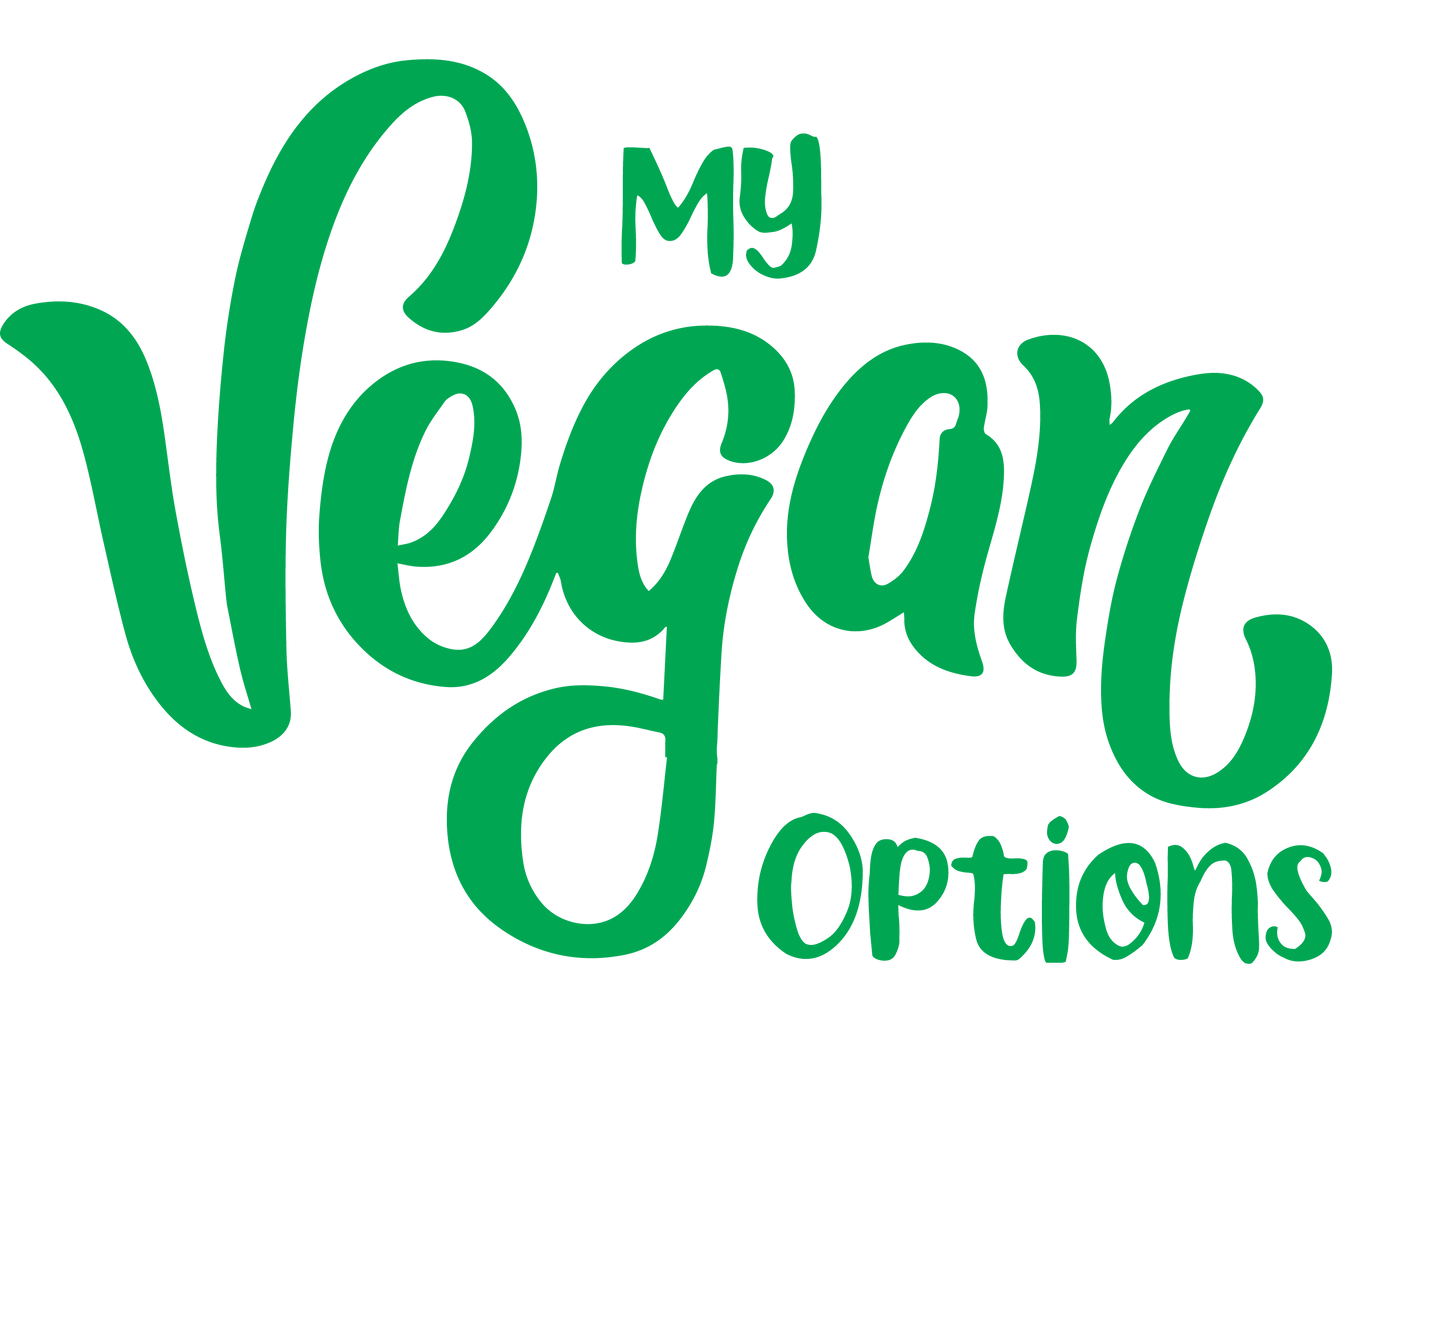 My Vegan Options Go Home